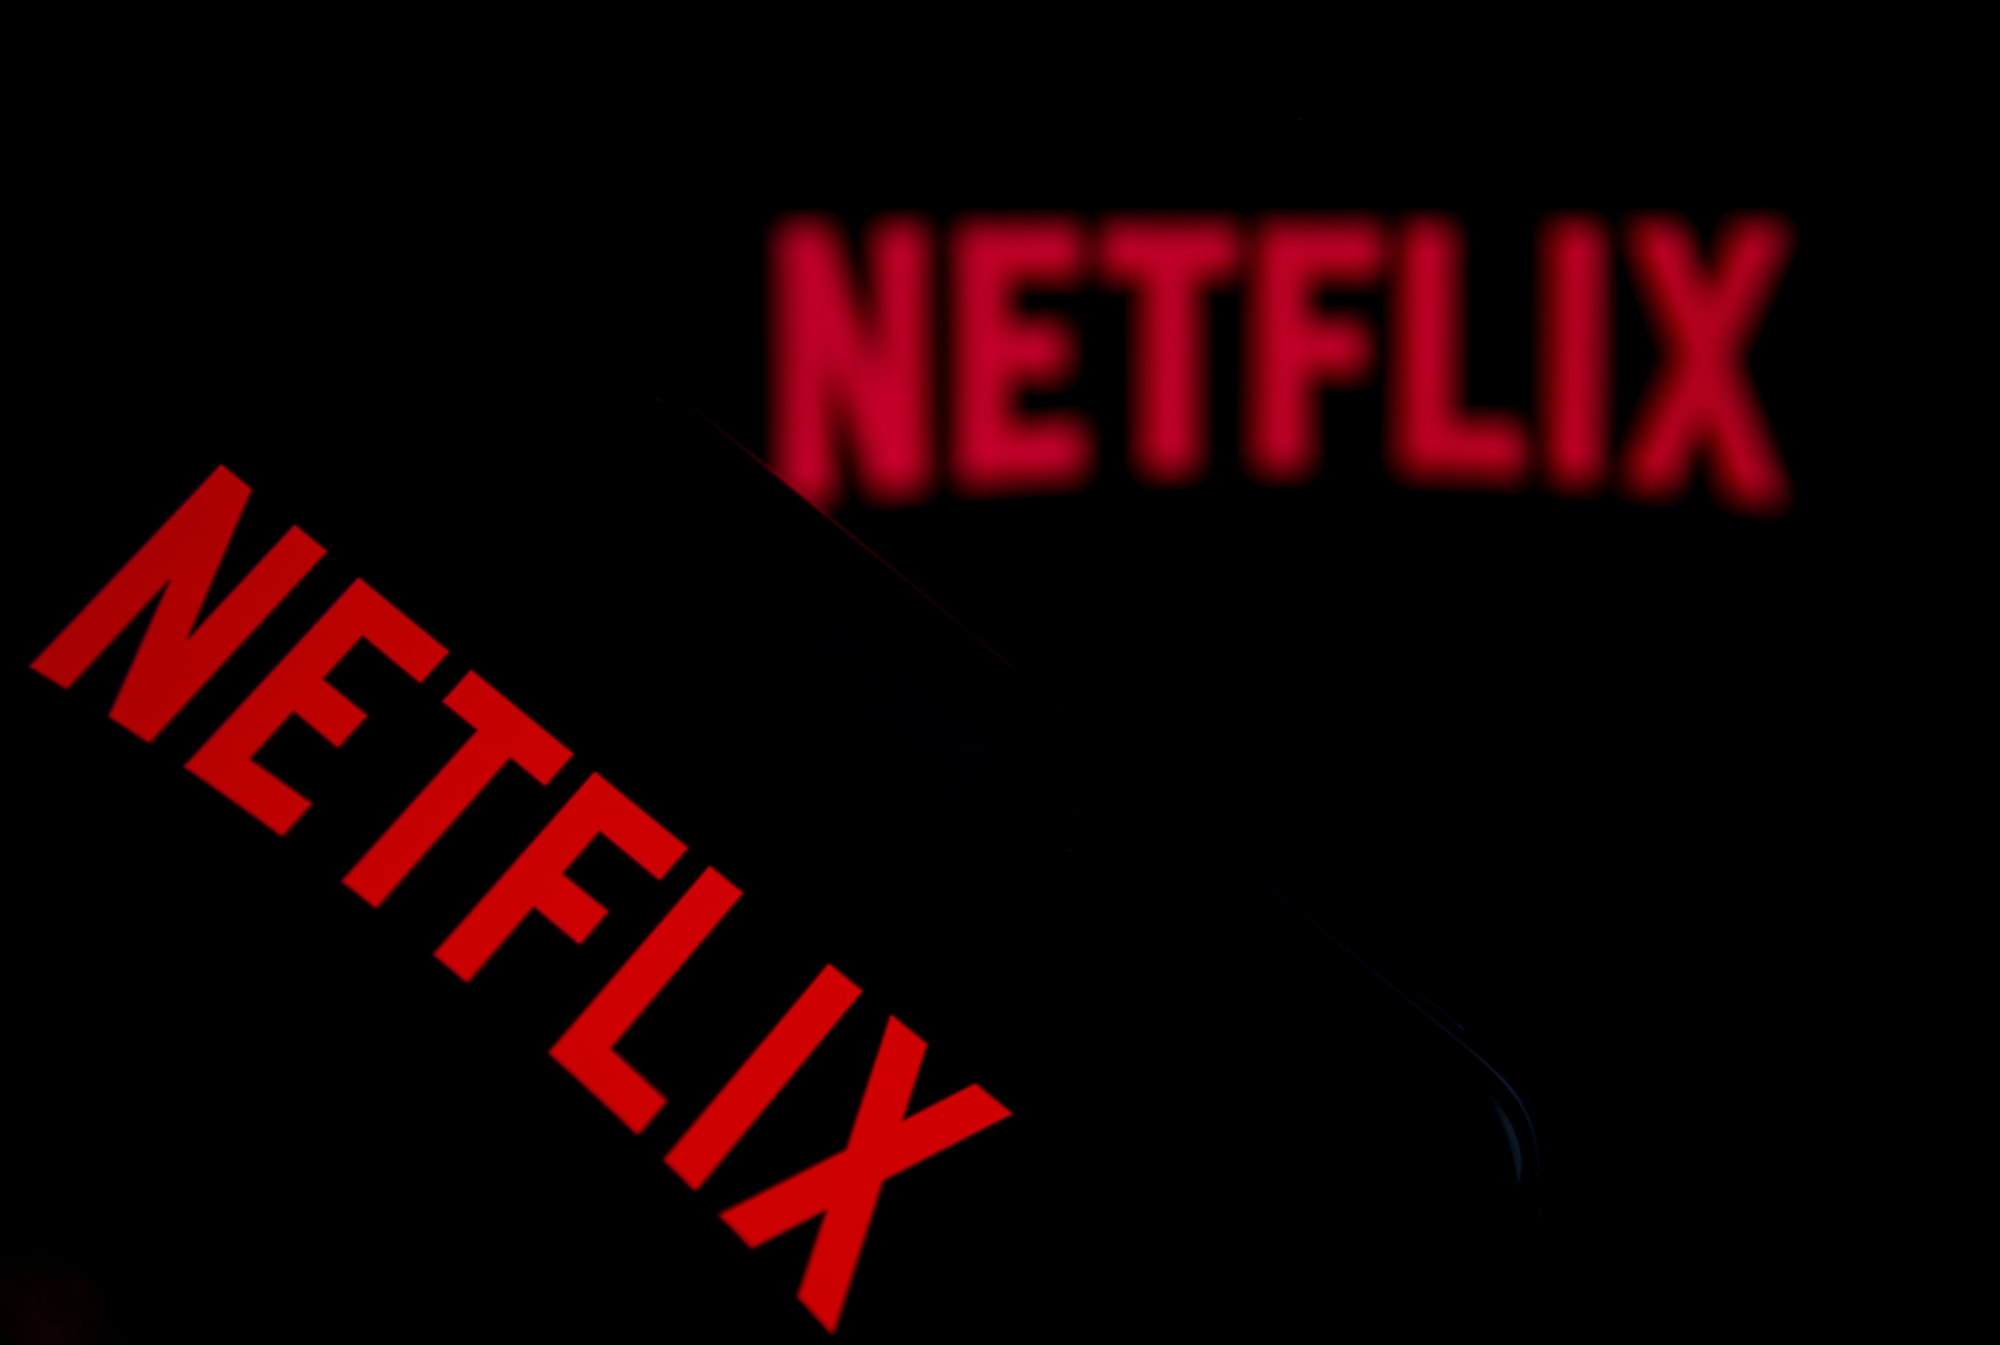 Sword Art Online season 4 Netflix release date confirmed for February 2022